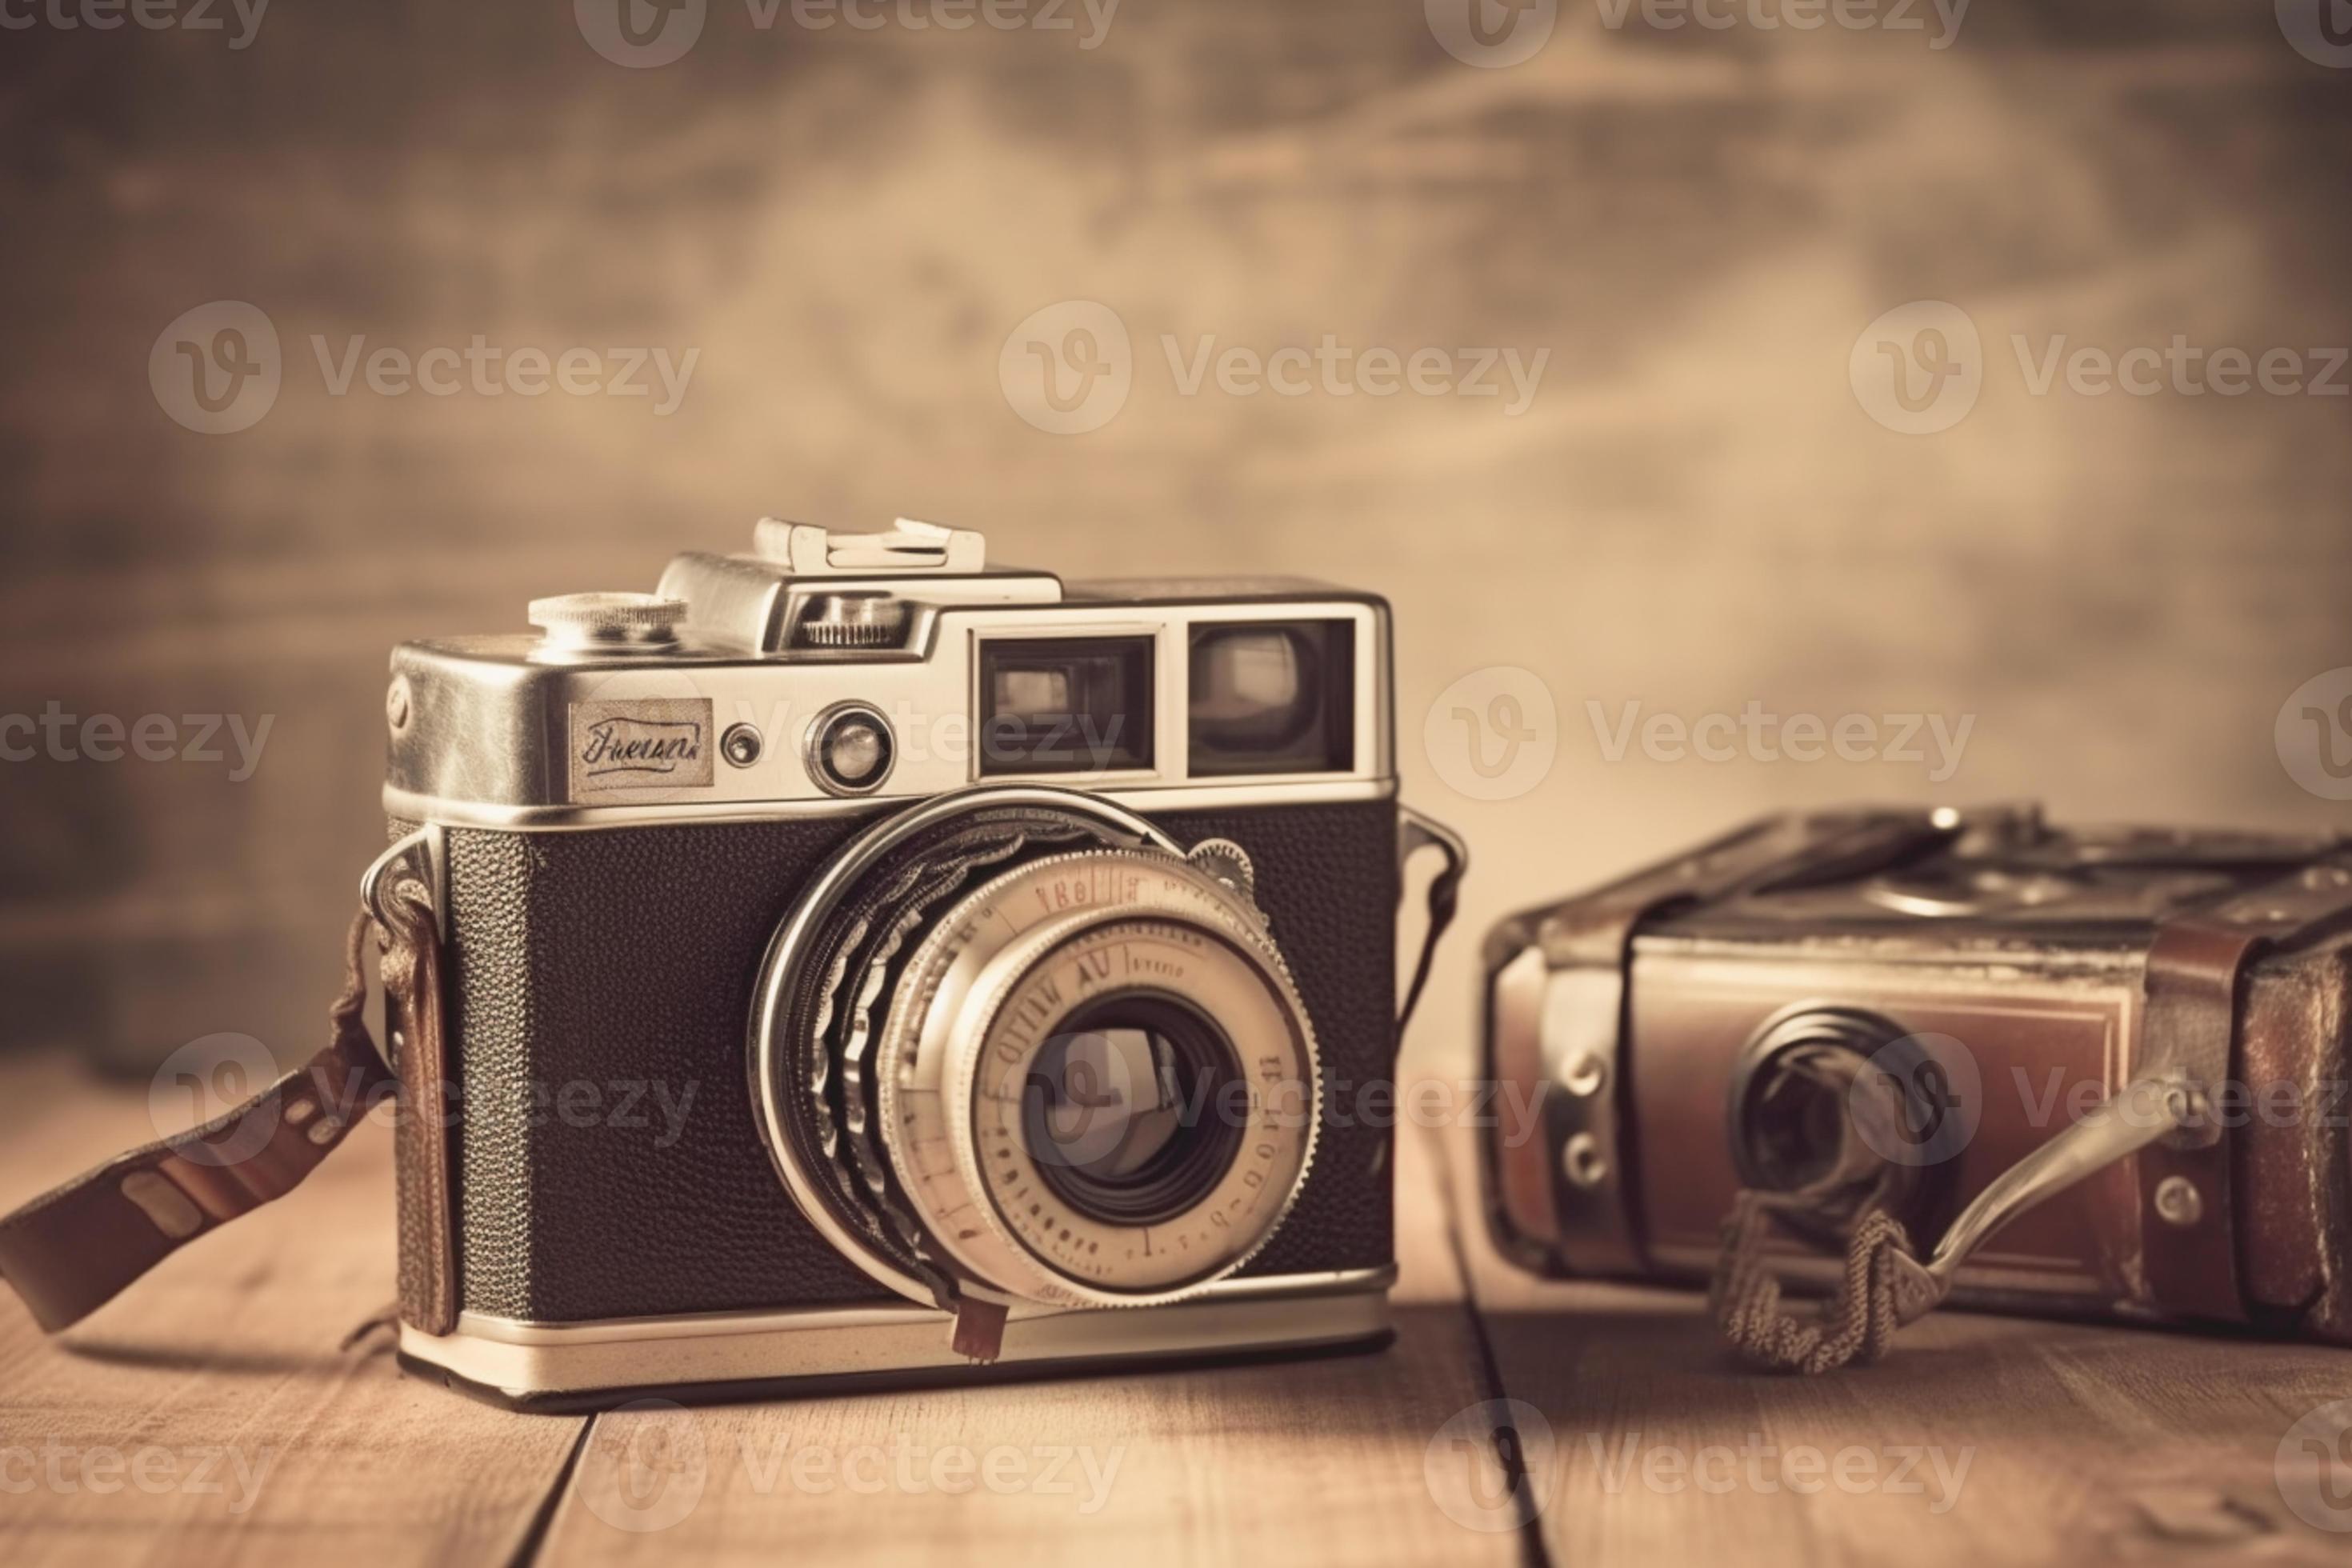 Old retro camera on vintage background. 90's concepts. Vintage